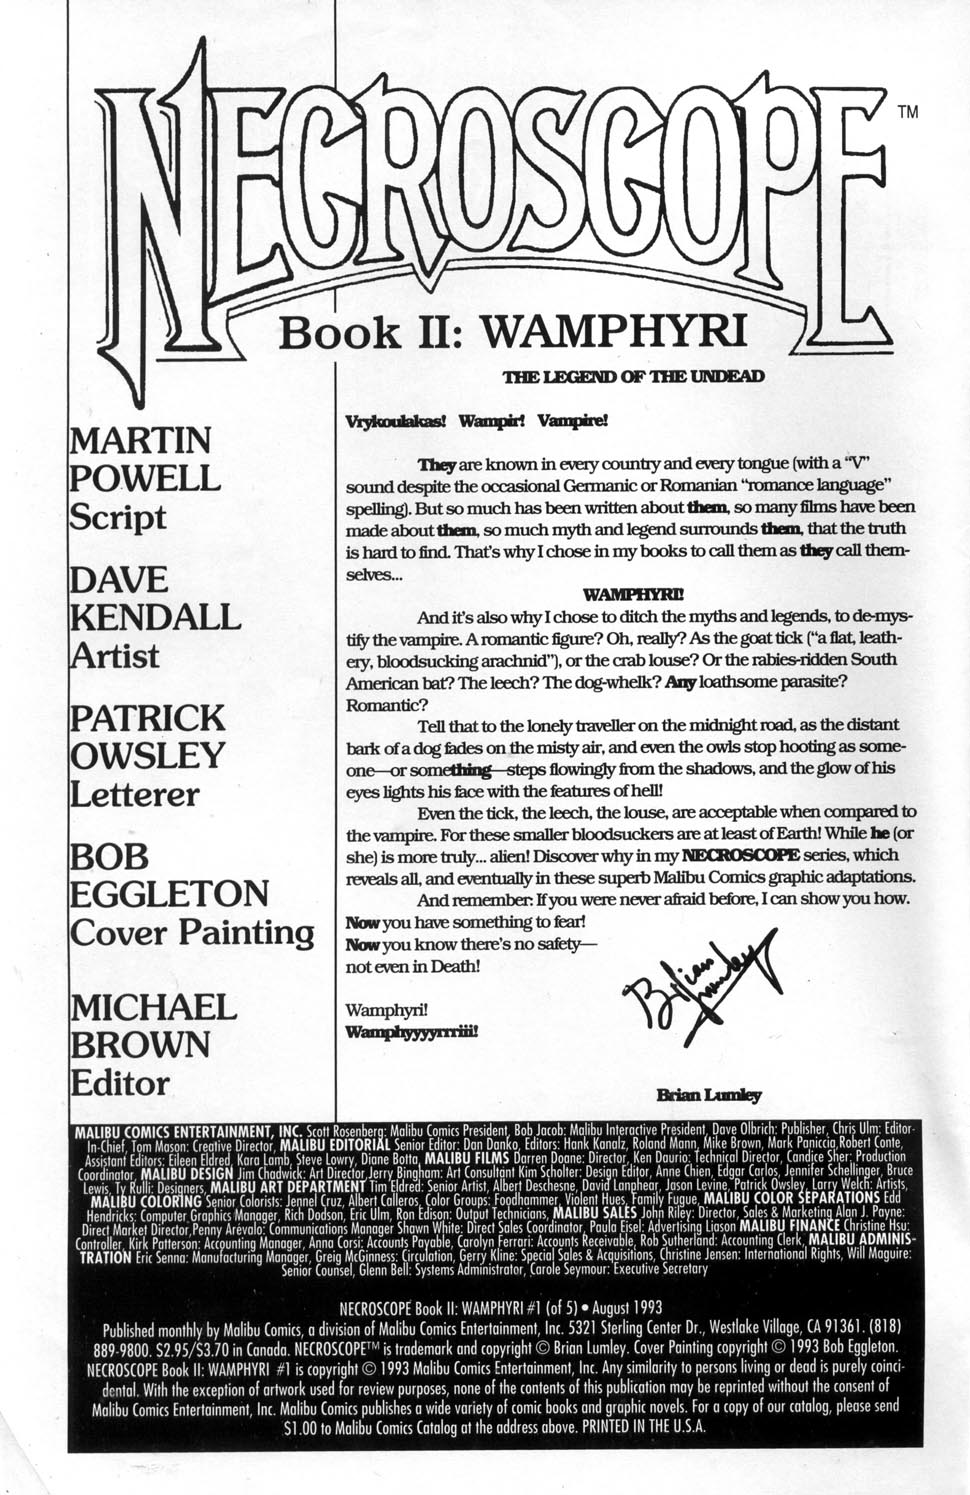 Read online Necroscope Book II: Wamphyri comic -  Issue #1 - 3